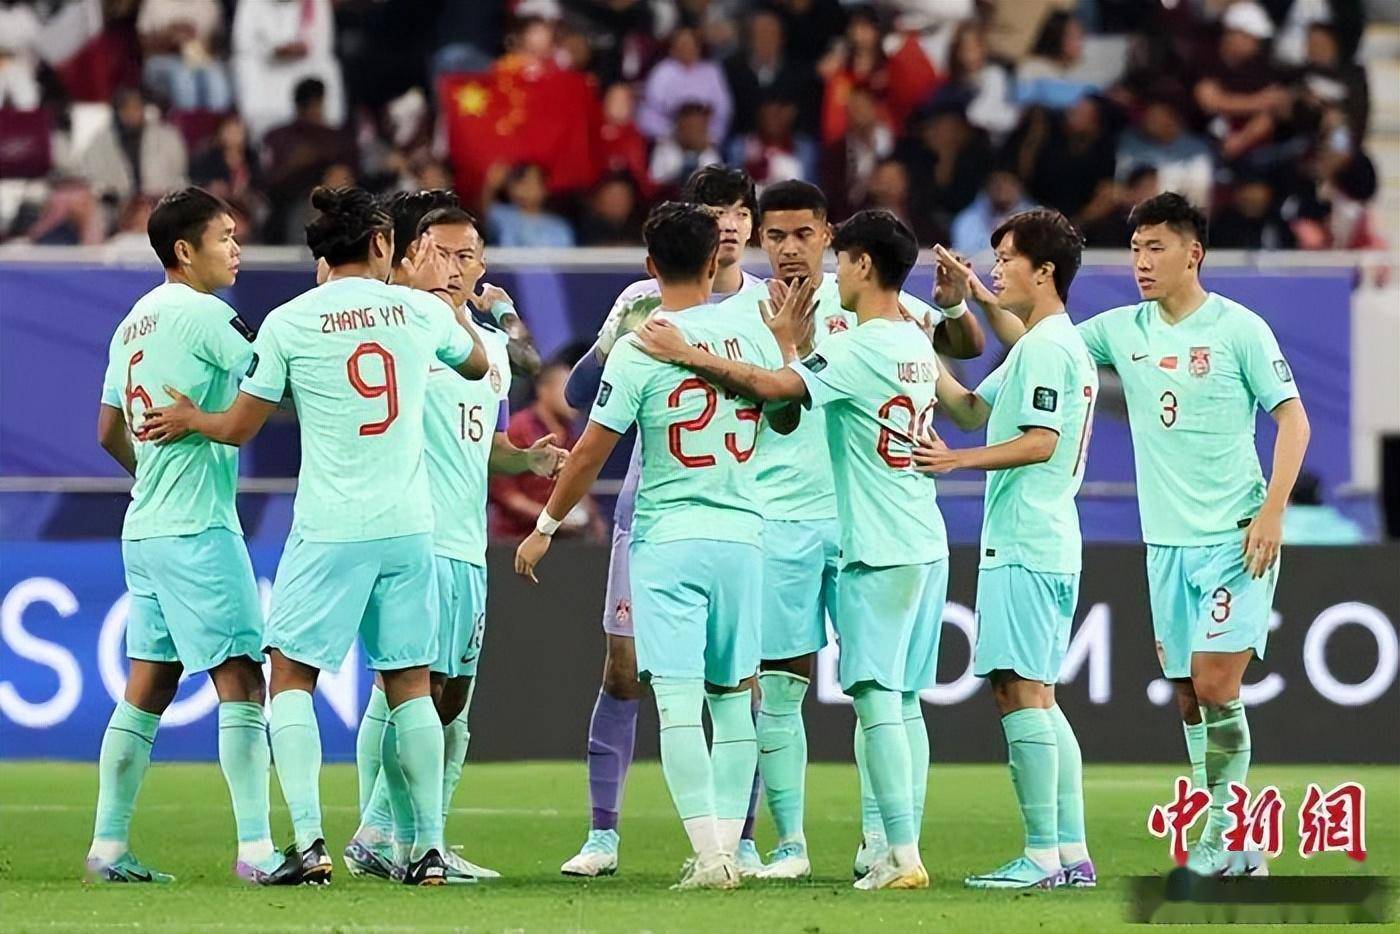 【168sports】三场小组赛一球未进，国足亚洲杯出线希望渺茫